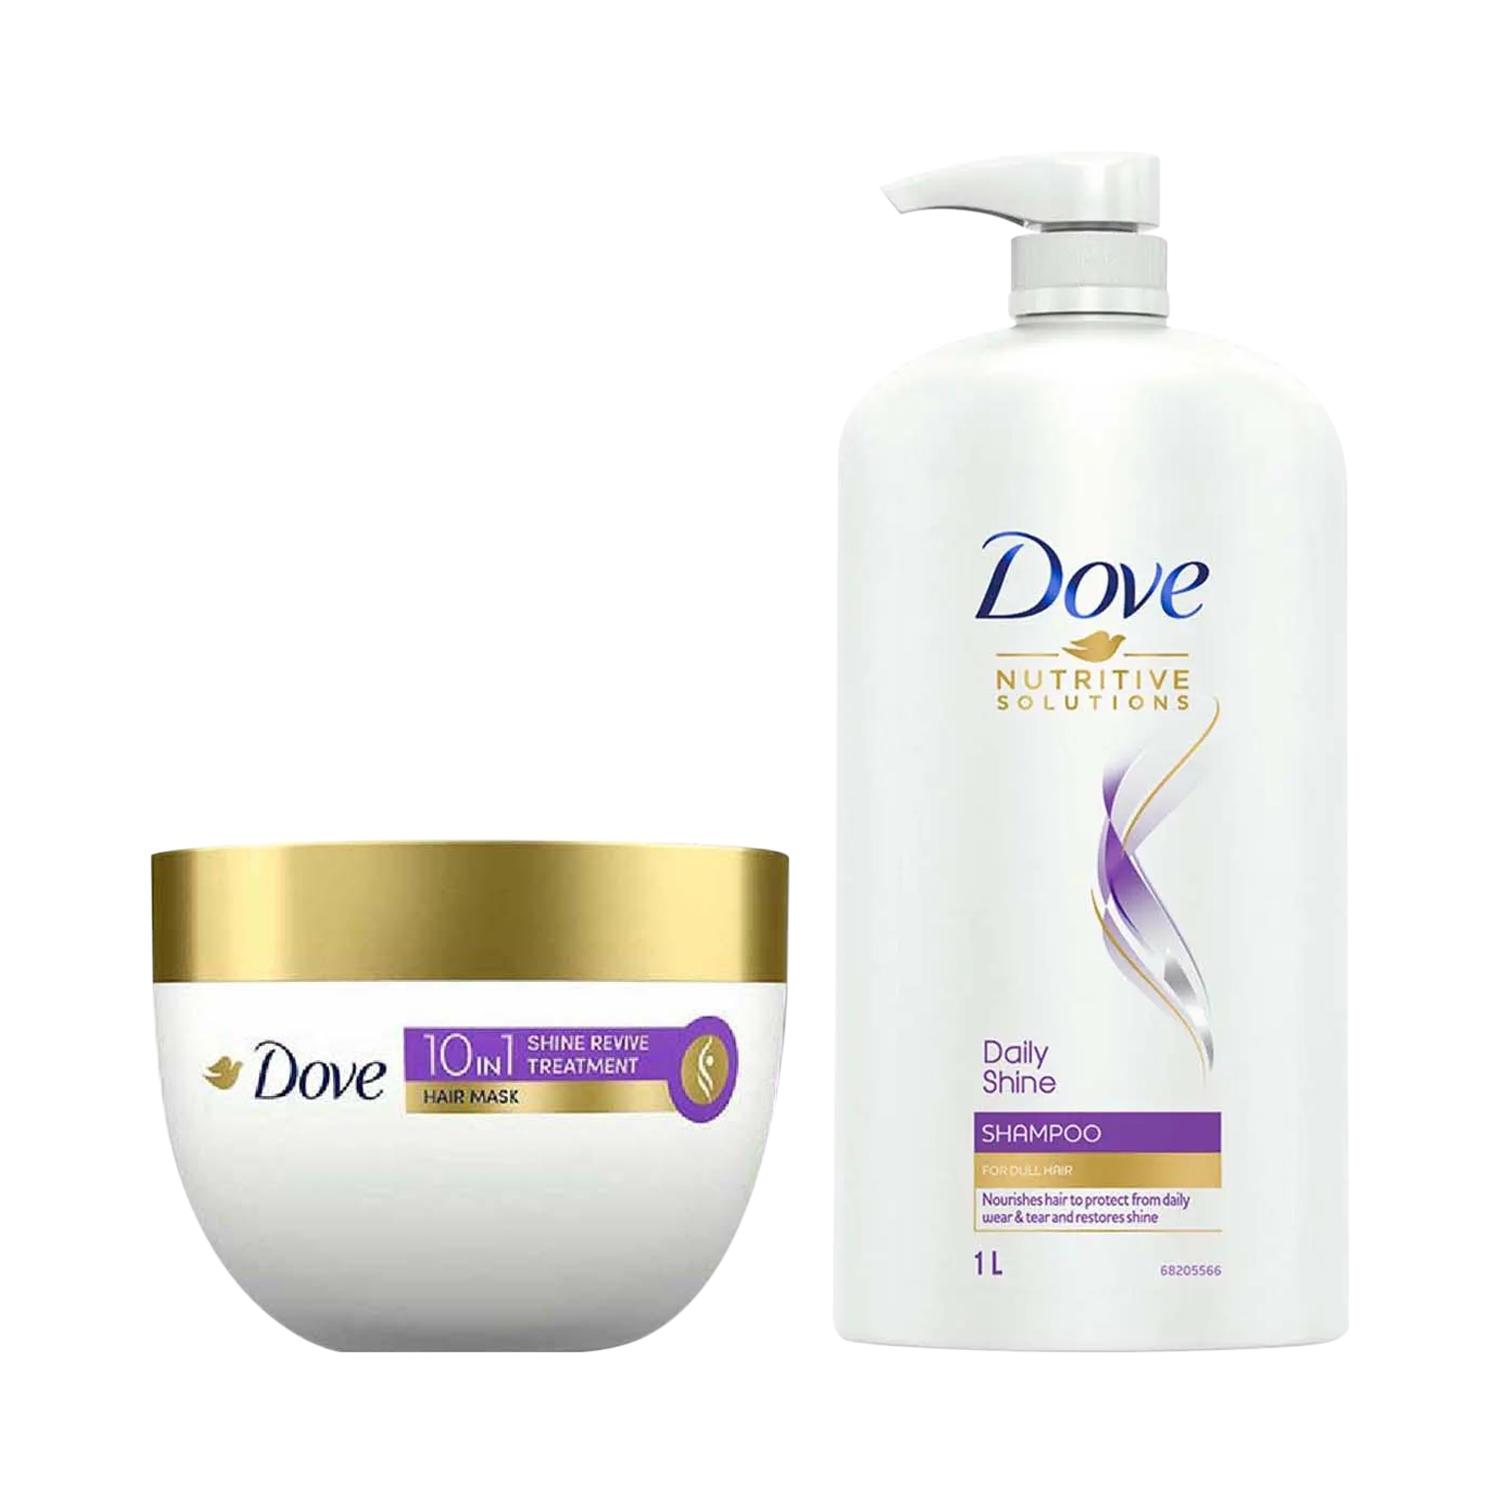 Dove | Dove Daily Shine Shampoo + Hair Mask for Shine Revive Treatment Combo